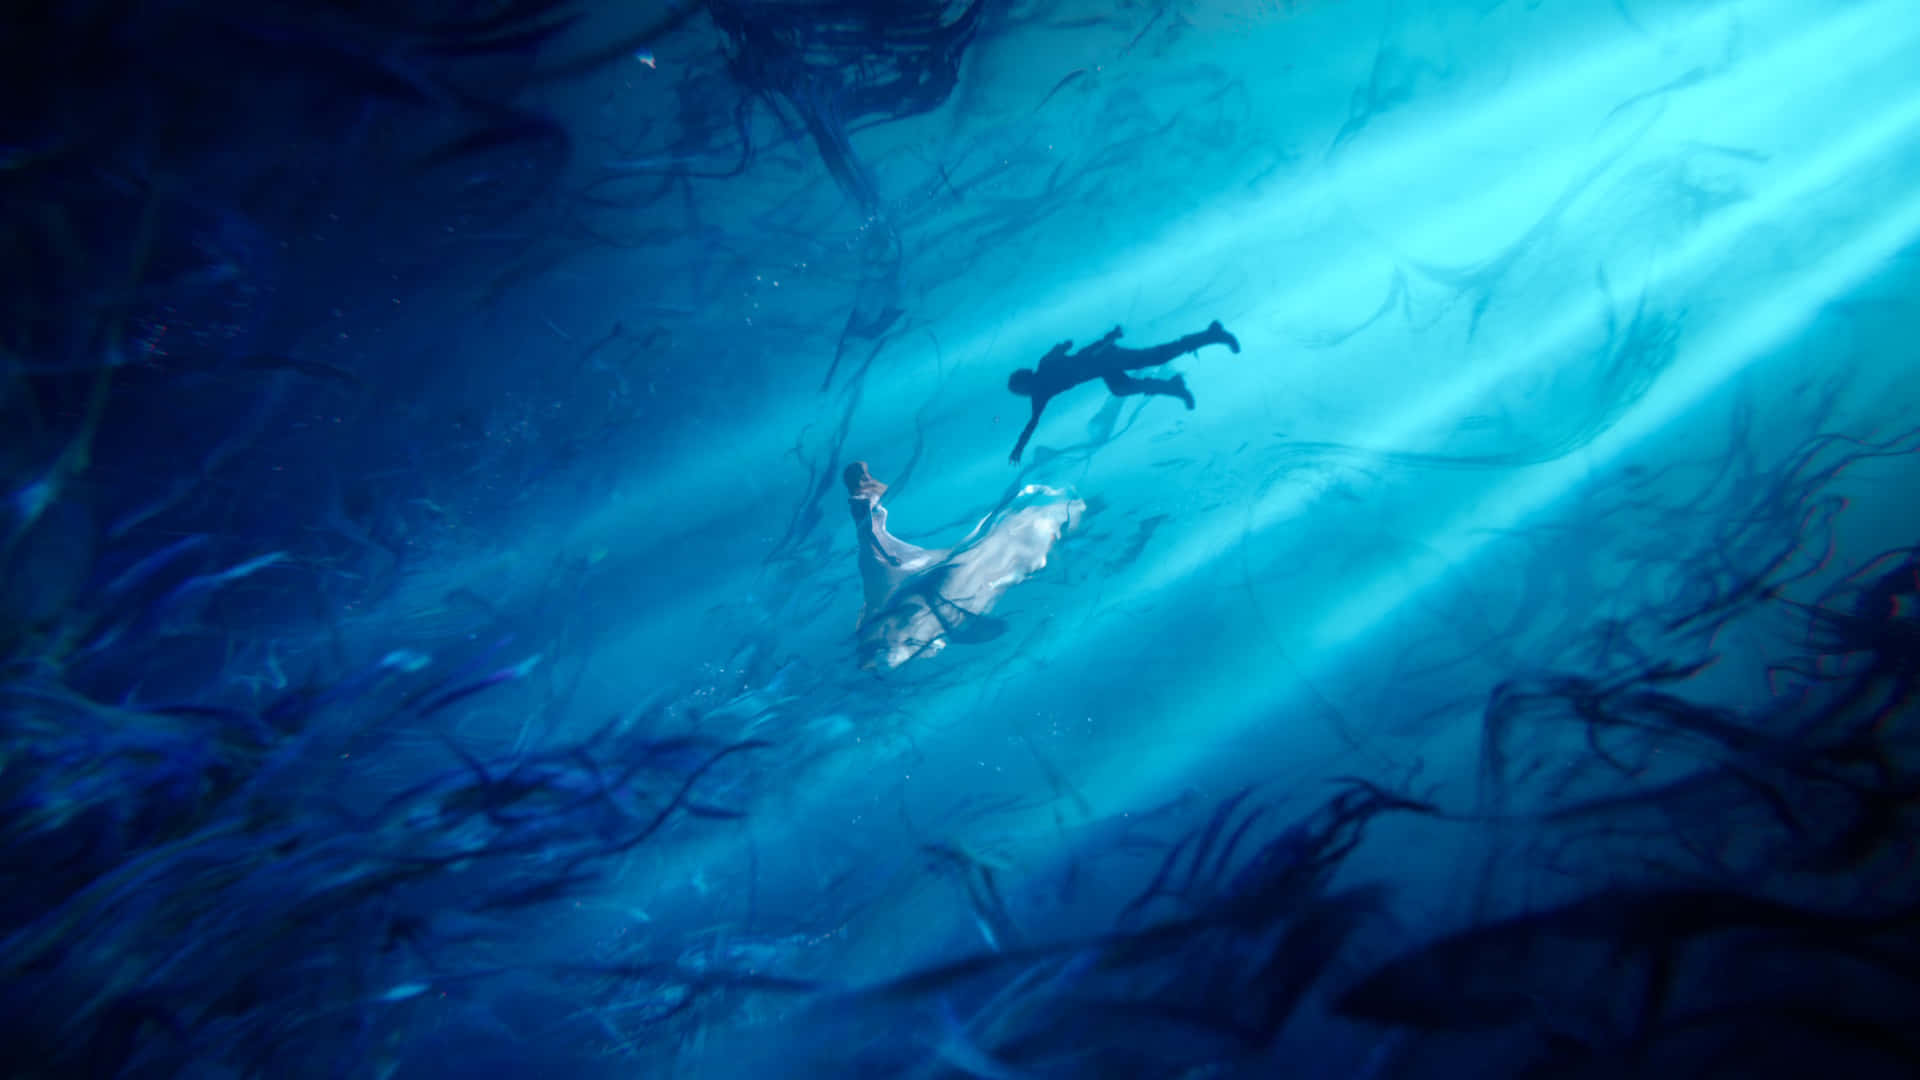 Underwater City Final Fantasy Xv Background